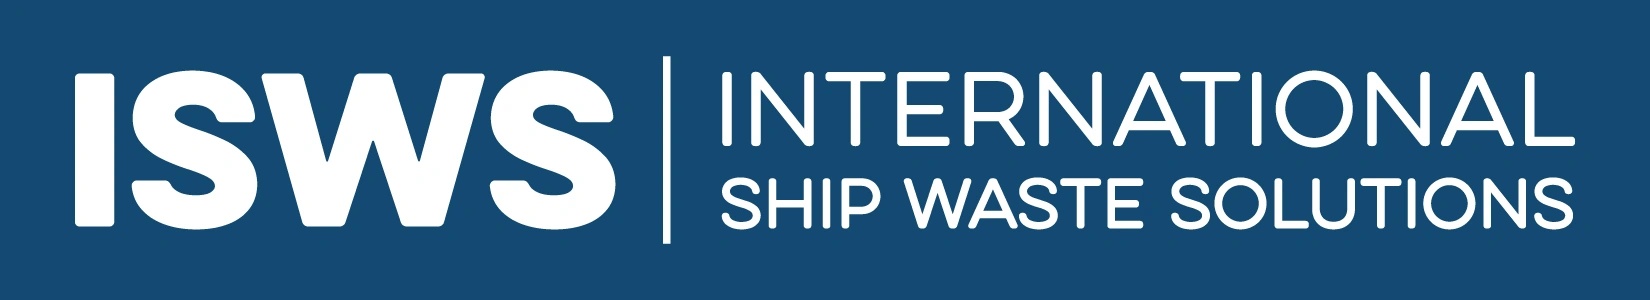 International Ship Waste Solutions